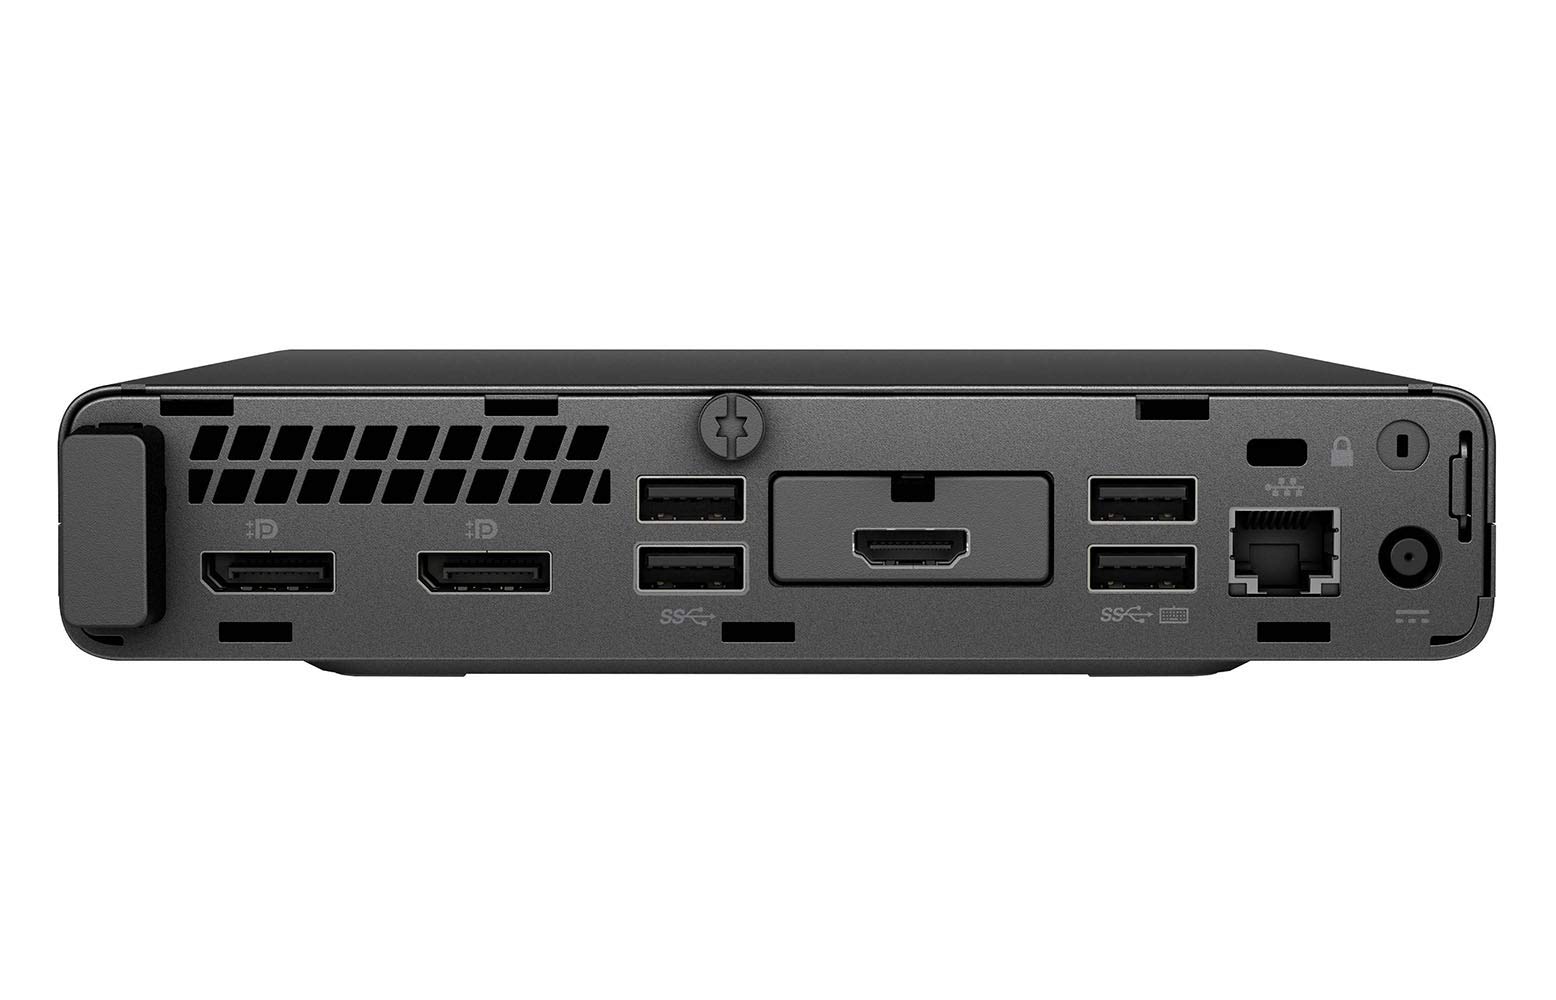 HP EliteDesk 705 G4 mini Home and Business Desktop Mini Black (AMD Ryzen 5 PRO 2400GE 4-Core, 8GB RAM, 256GB SSD, AMD RX Vega 11, Wifi, Bluetooth, 6xUSB 3.1, 3 Display Port (DP), Win 10 Pro) (Renewed)